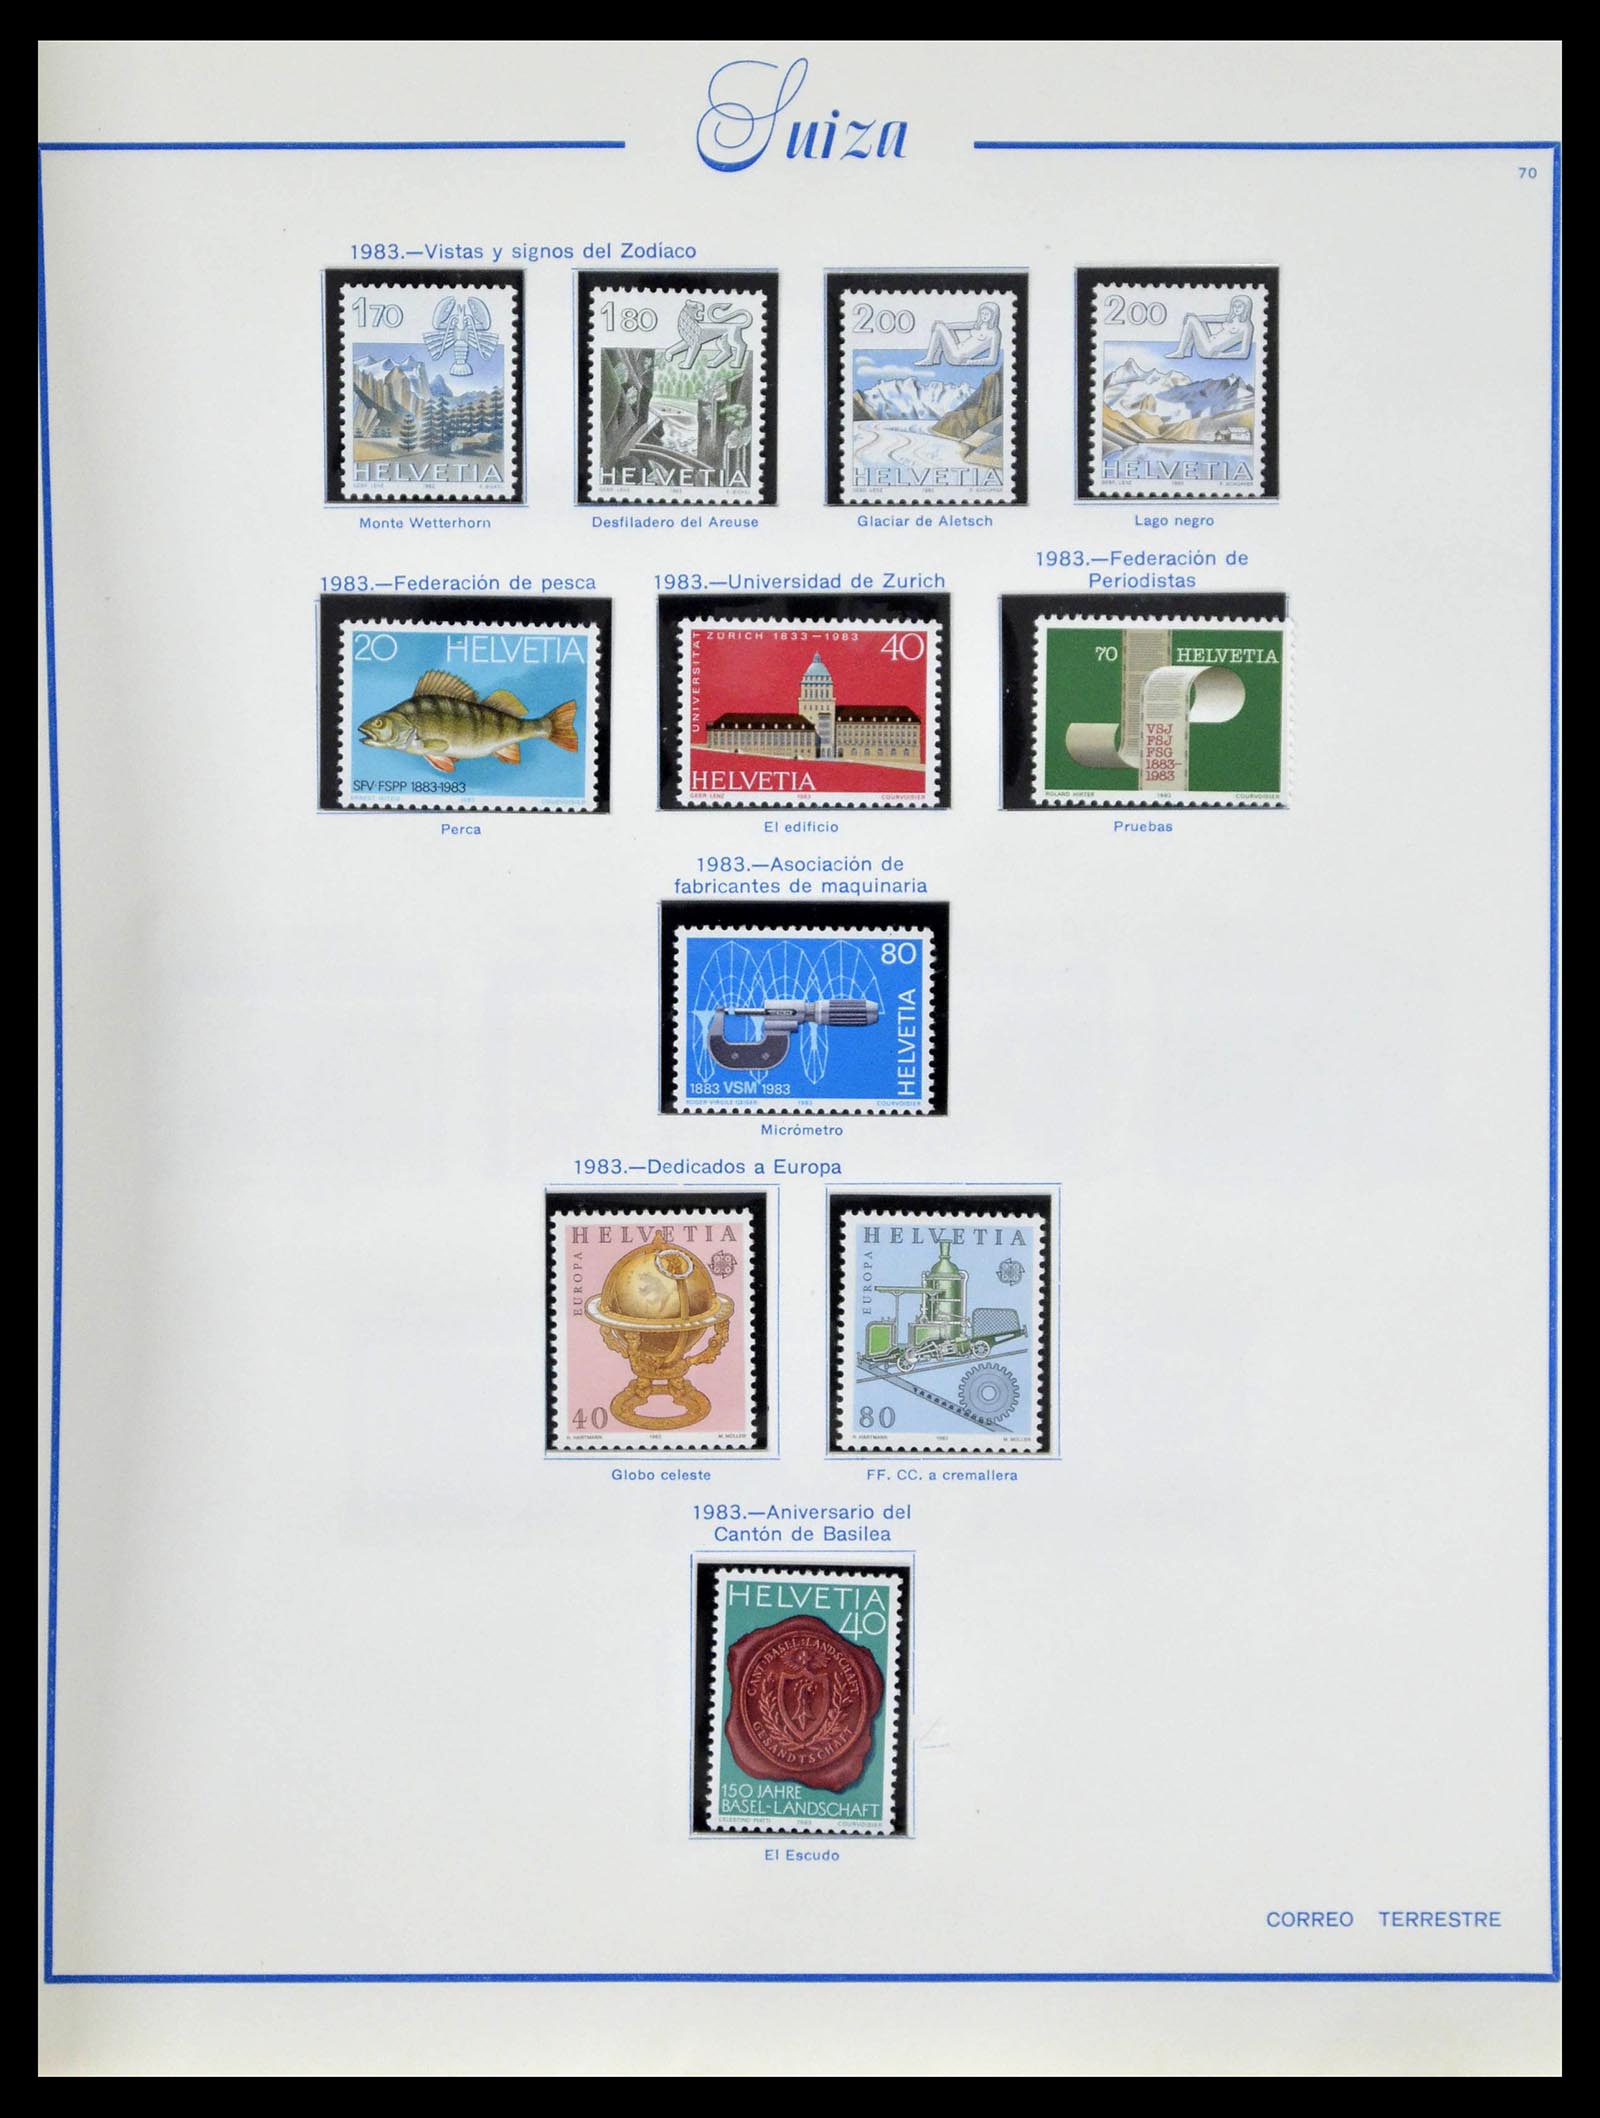 39217 0077 - Stamp collection 39217 Switzerland 1850-1986.